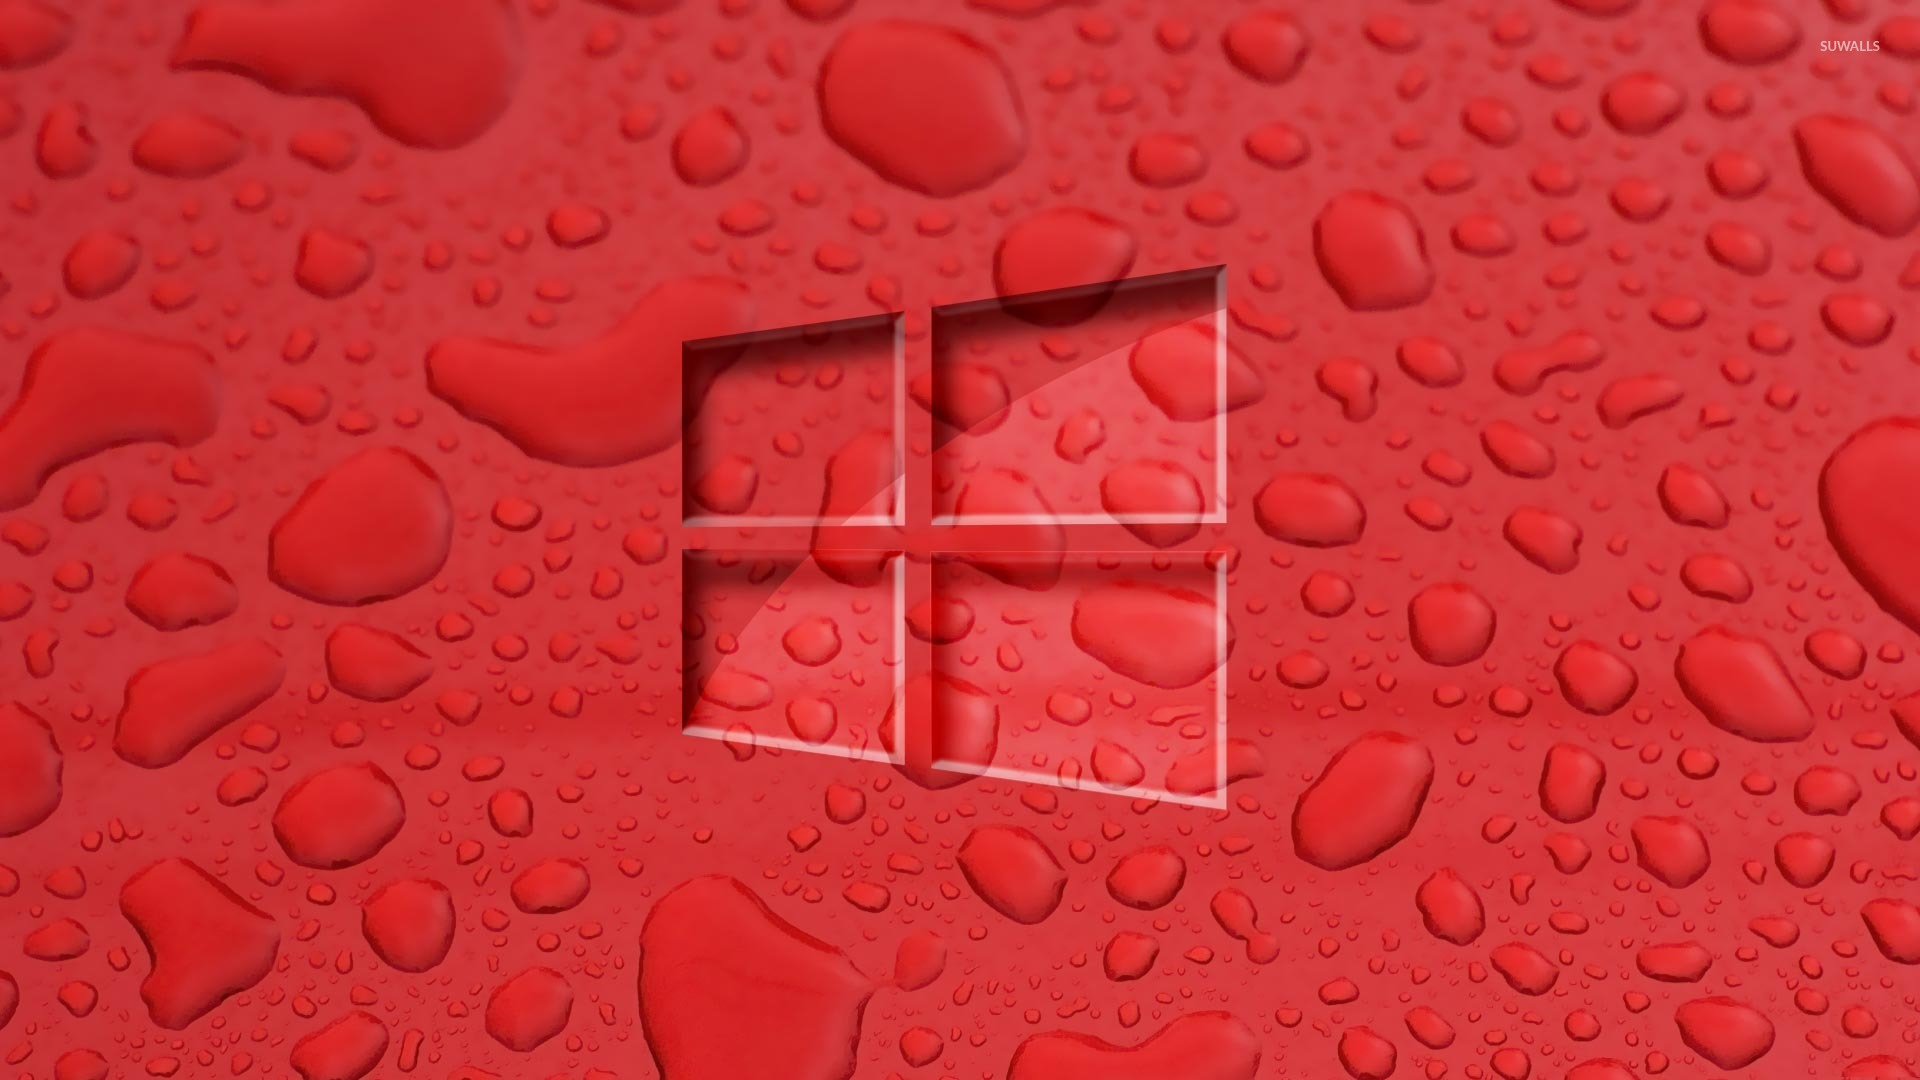 Windows 10 On Water Drops 2 Wallpaper Computer Wallpapers 50550